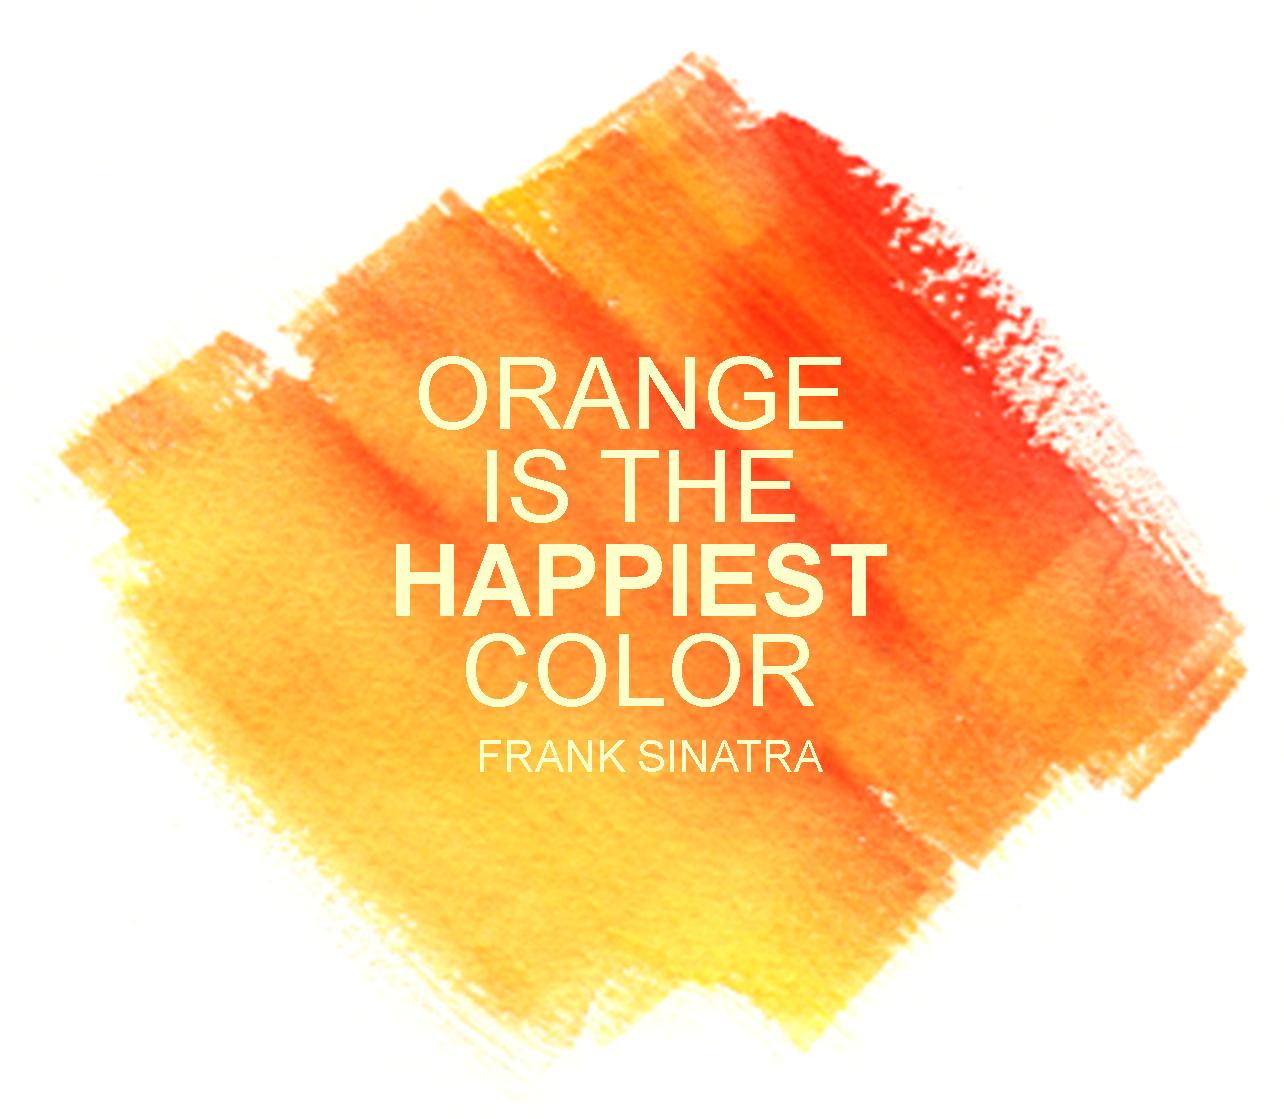 Orange is the happiest color. Frank Sinatra